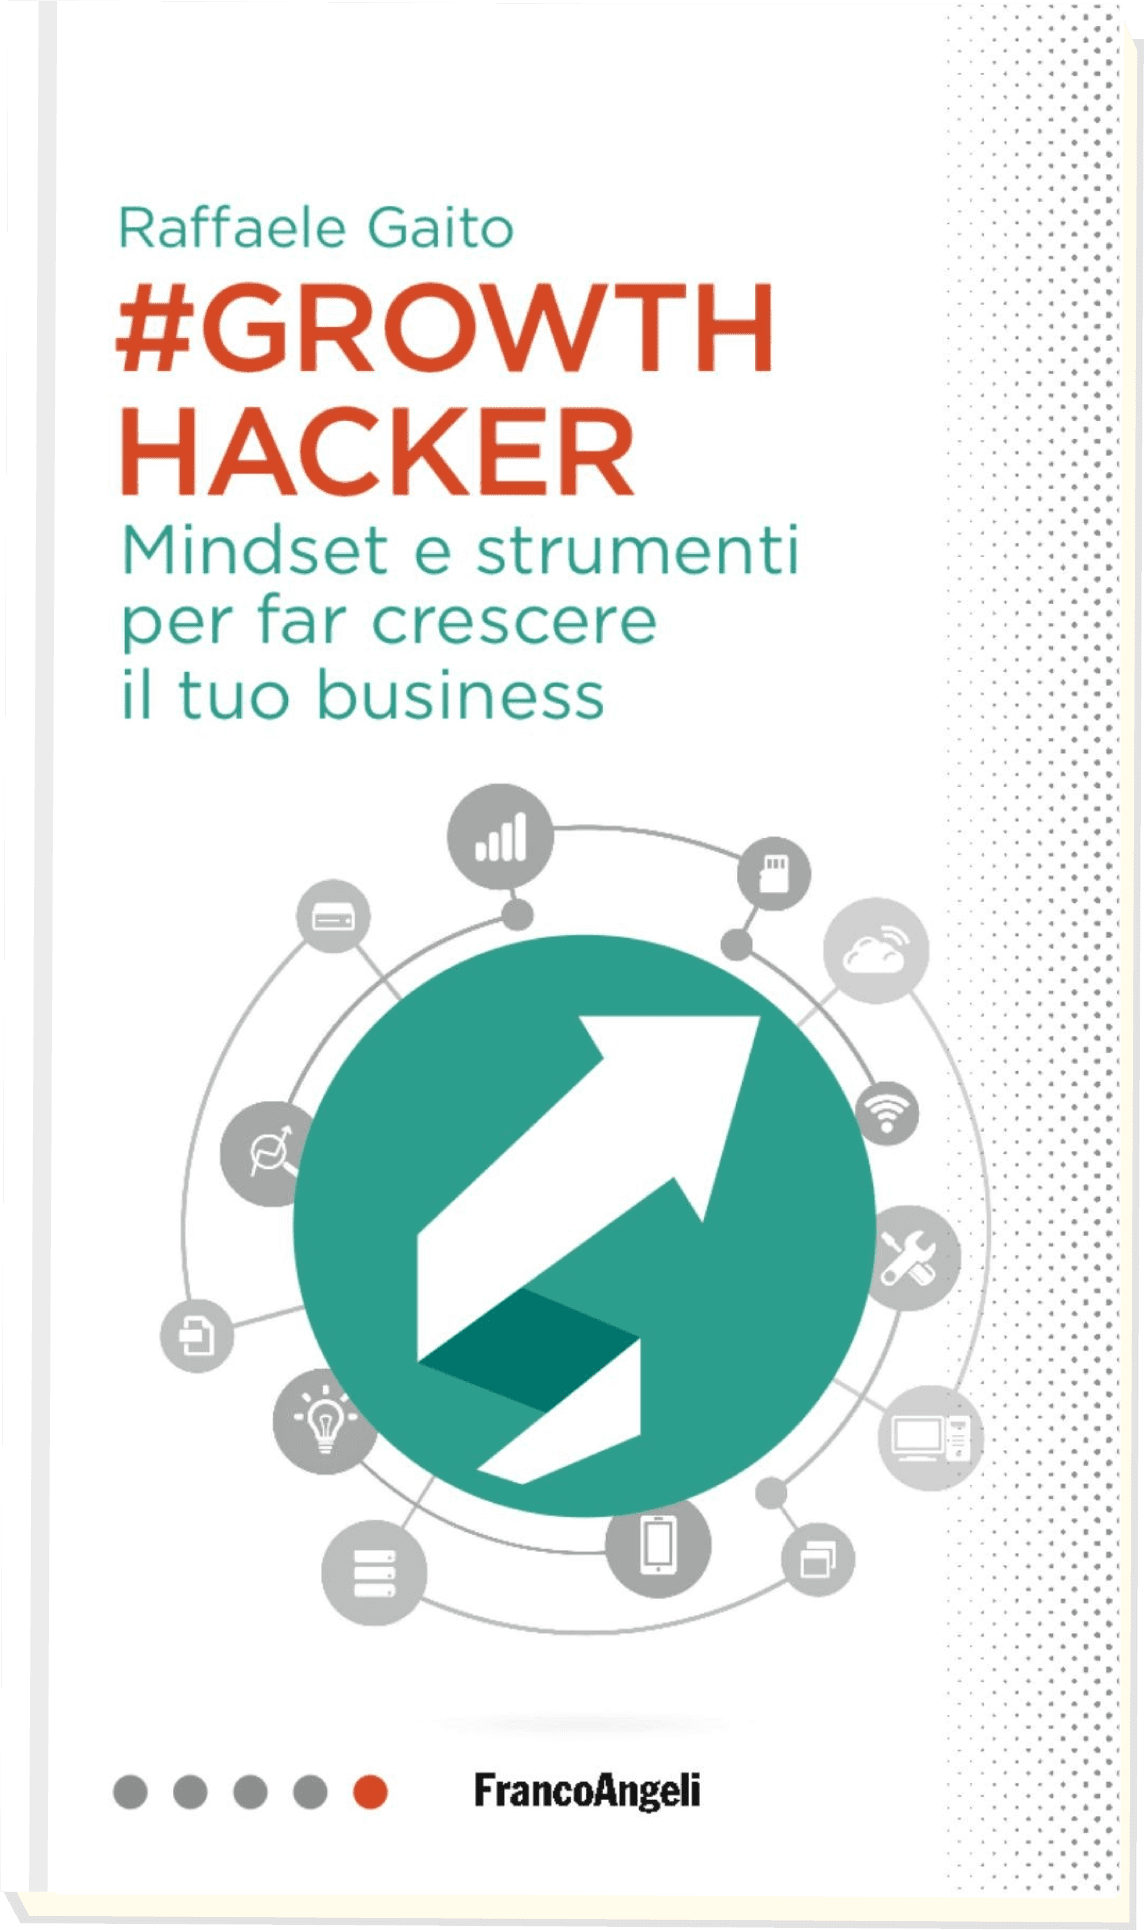 Raffaele Gaito #Growth Hacker